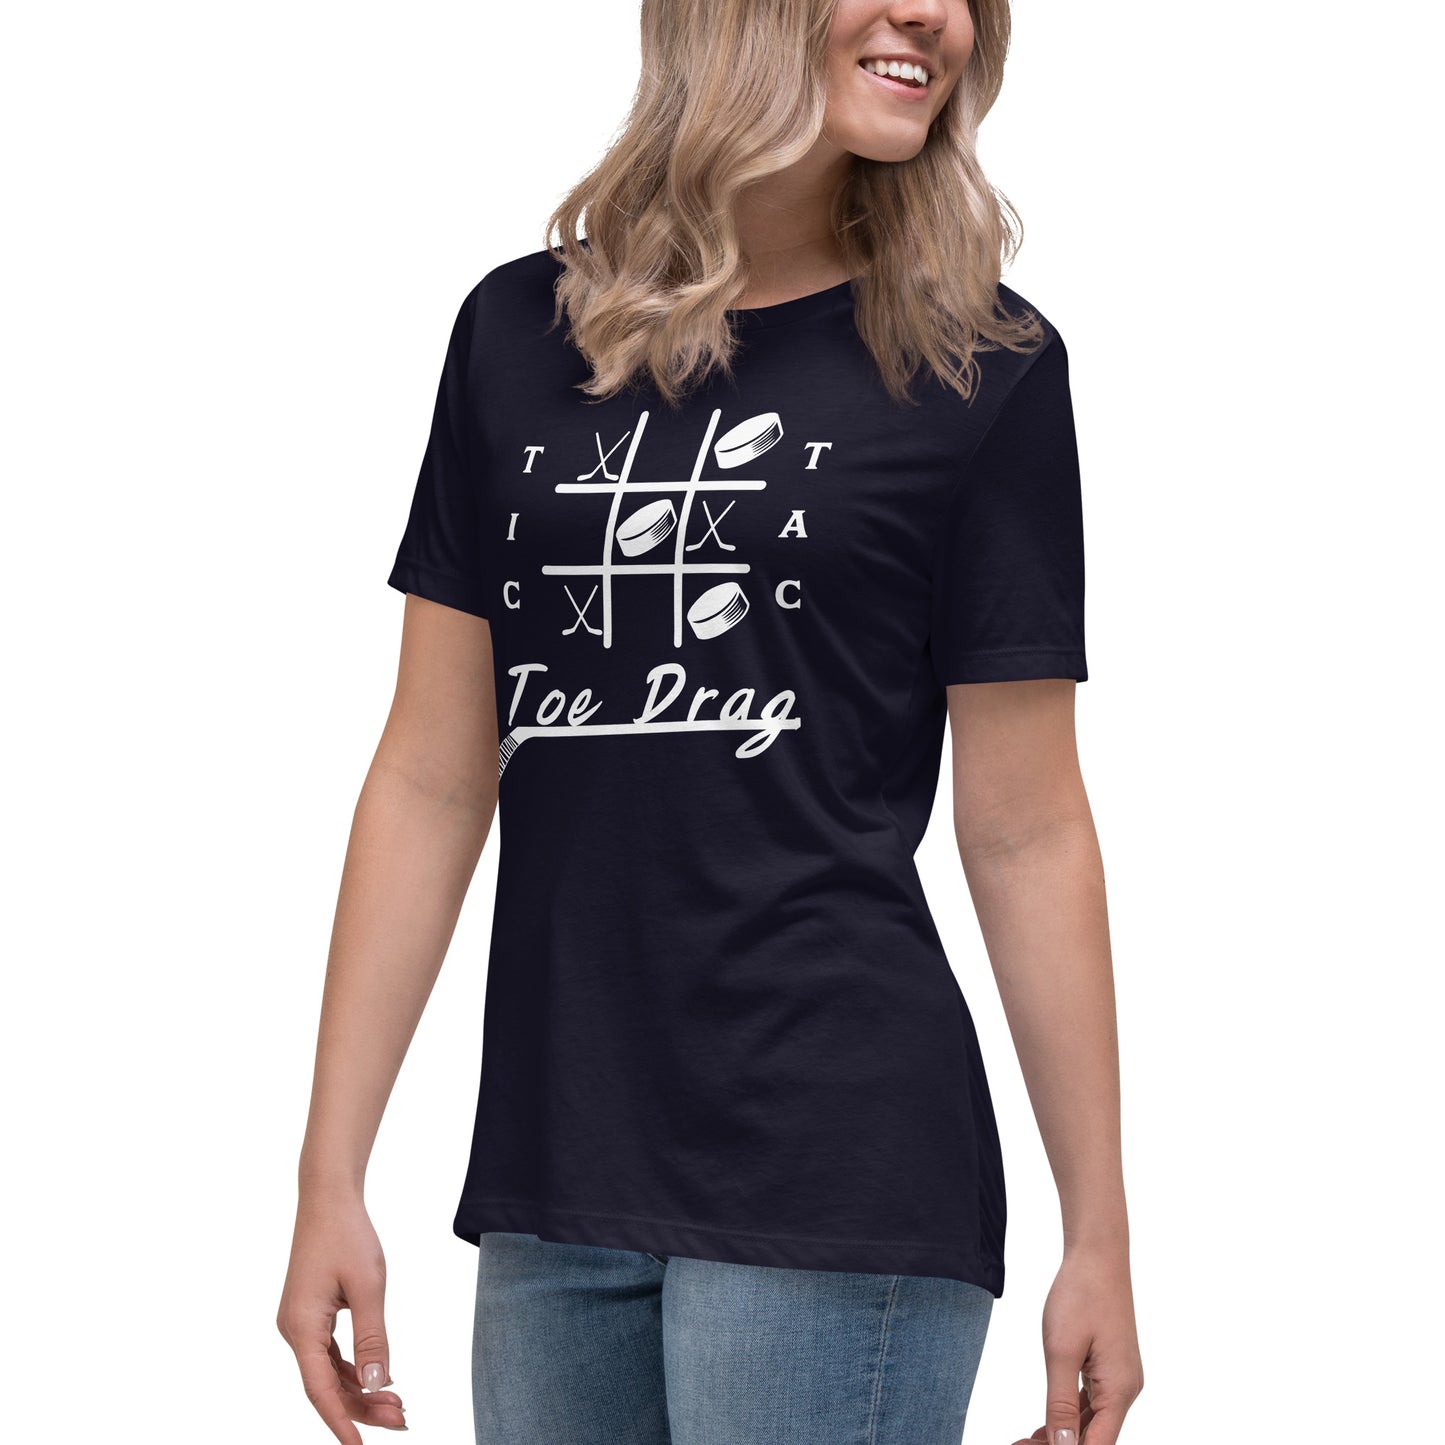 Tic Tac Toe Drag Women's Relaxed T-Shirt